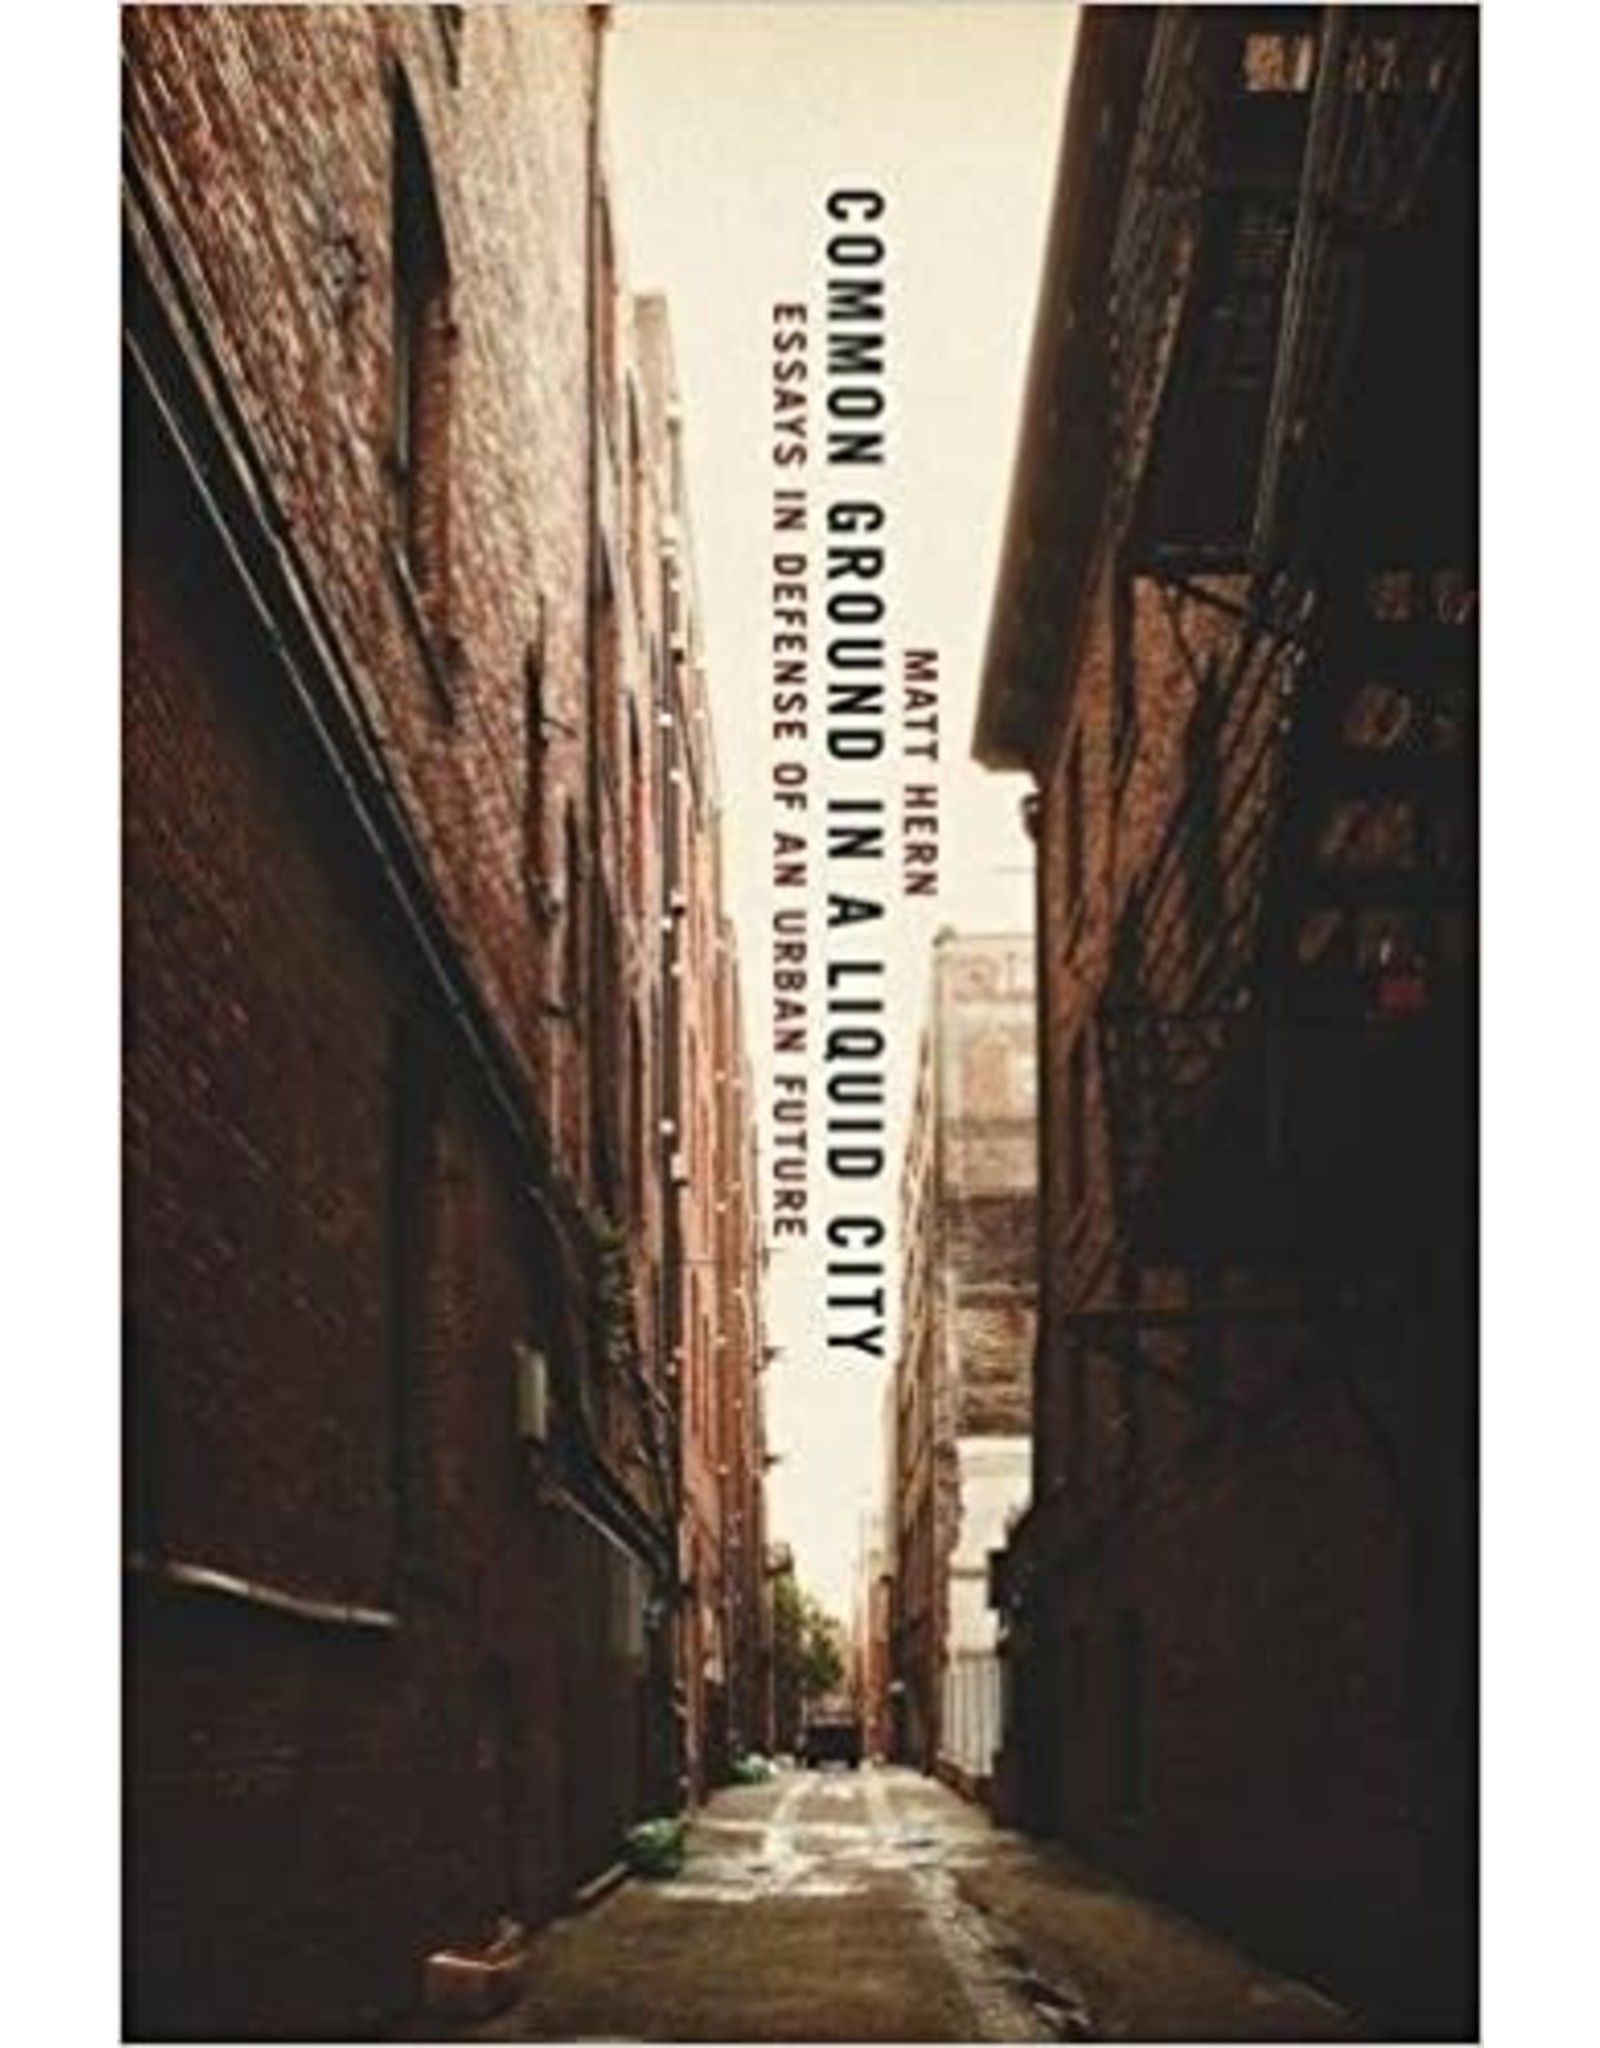 Literature Common Ground in a Liquid City: Essays in Defense of an Urban Future